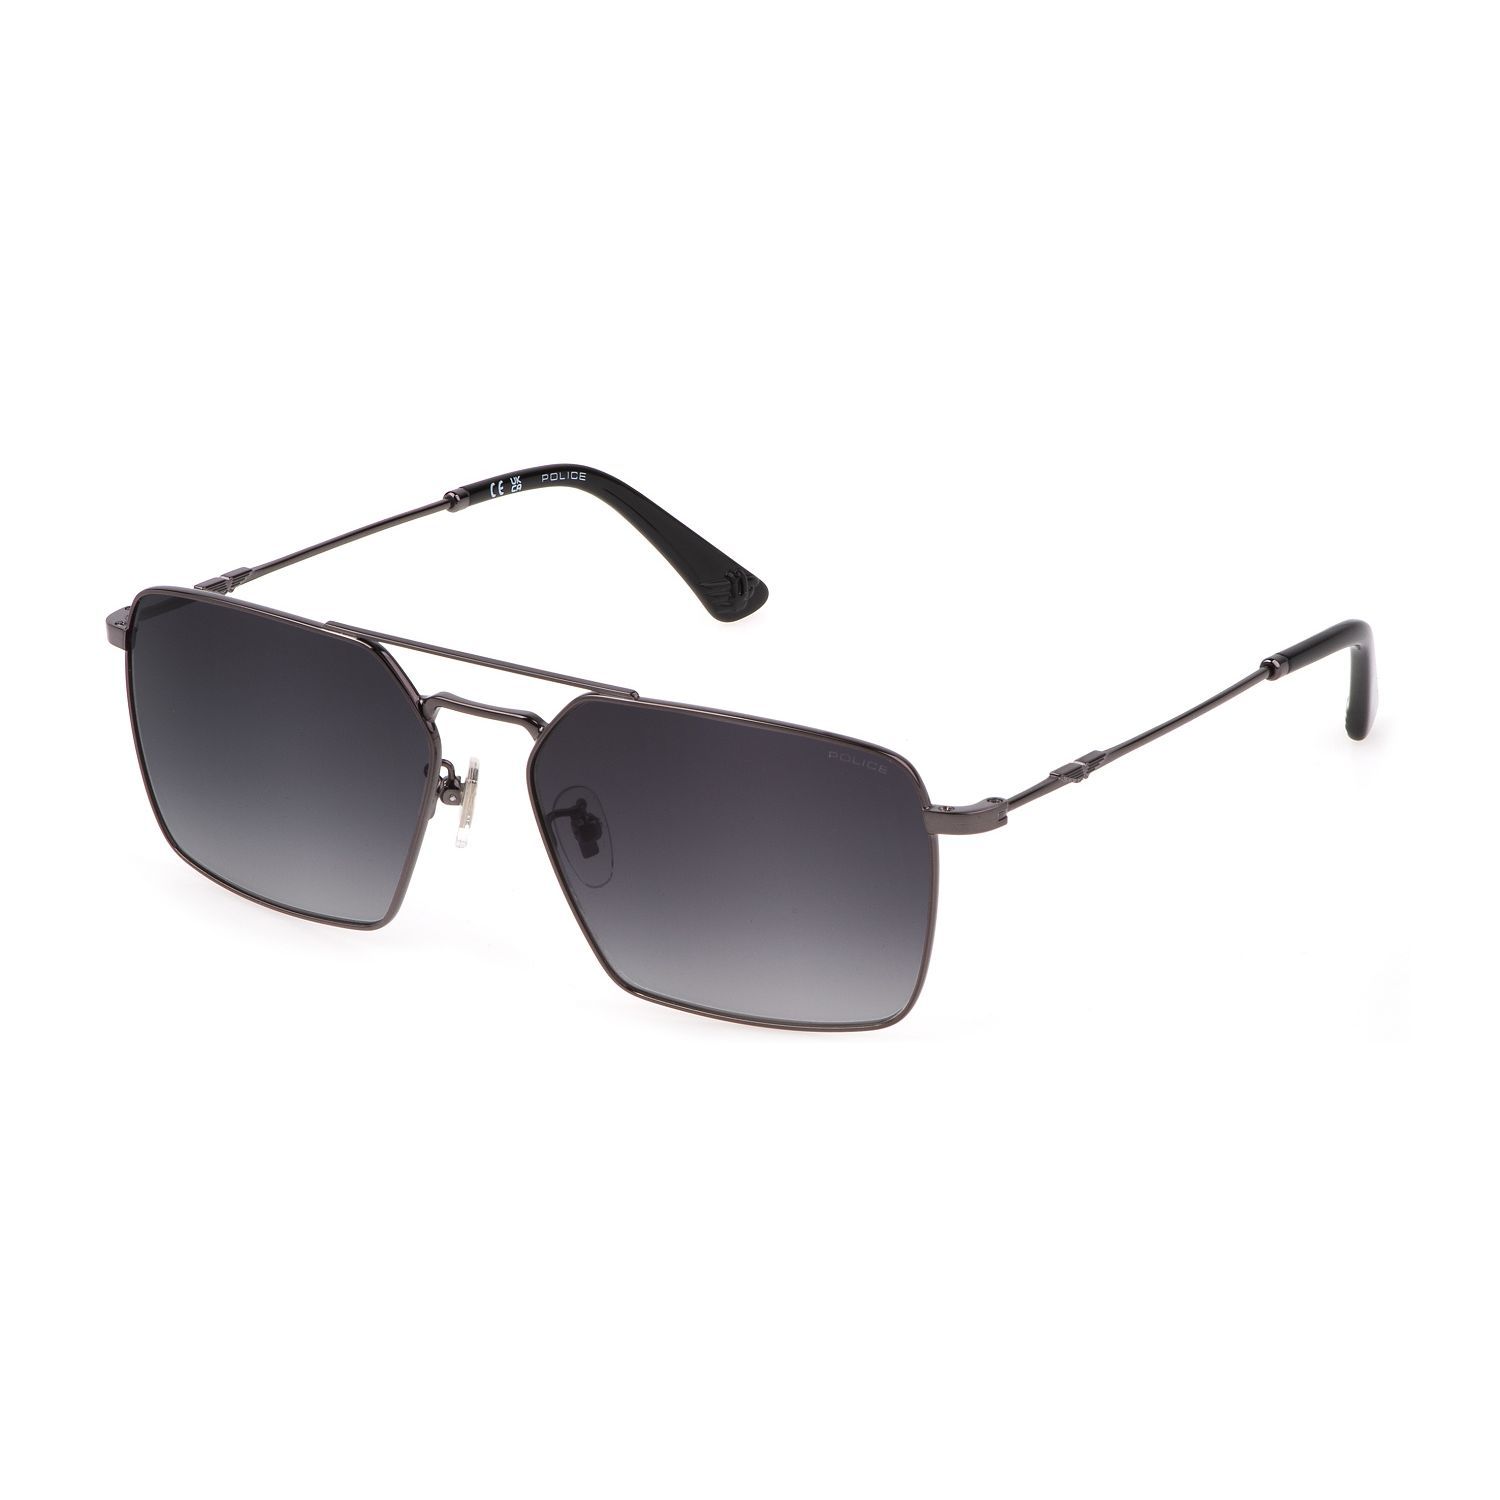 SPLL07M Square Sunglasses 568 - size 56